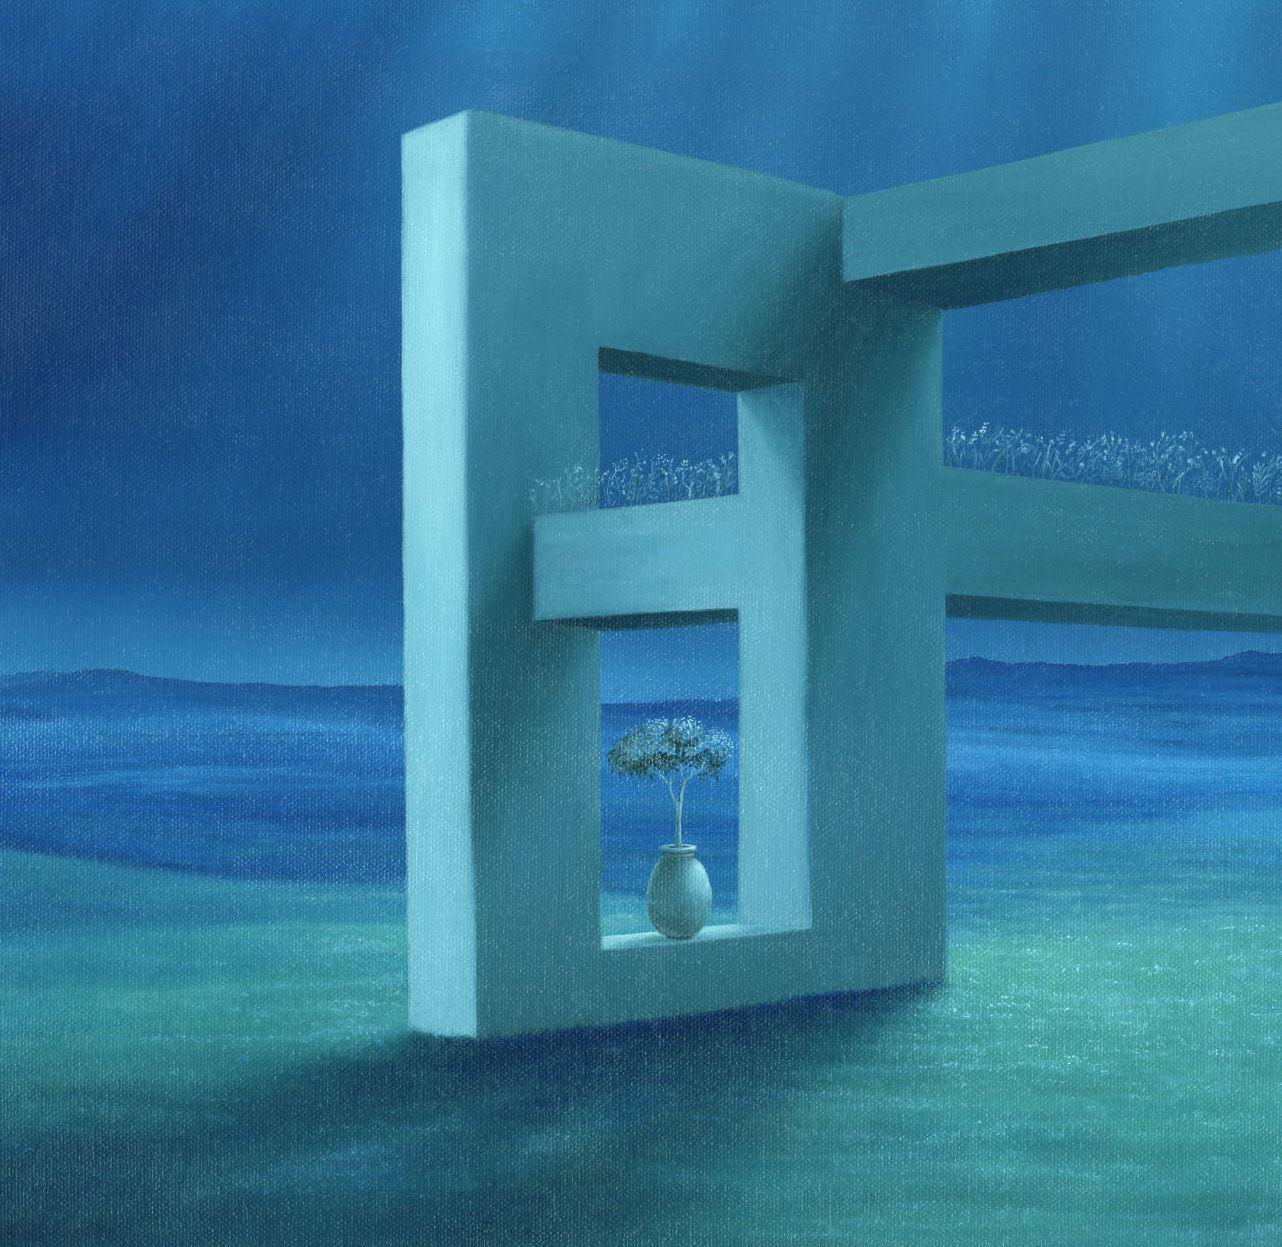 Impossible Walls, Original surrealistisches blaues Gemälde, 2022
24